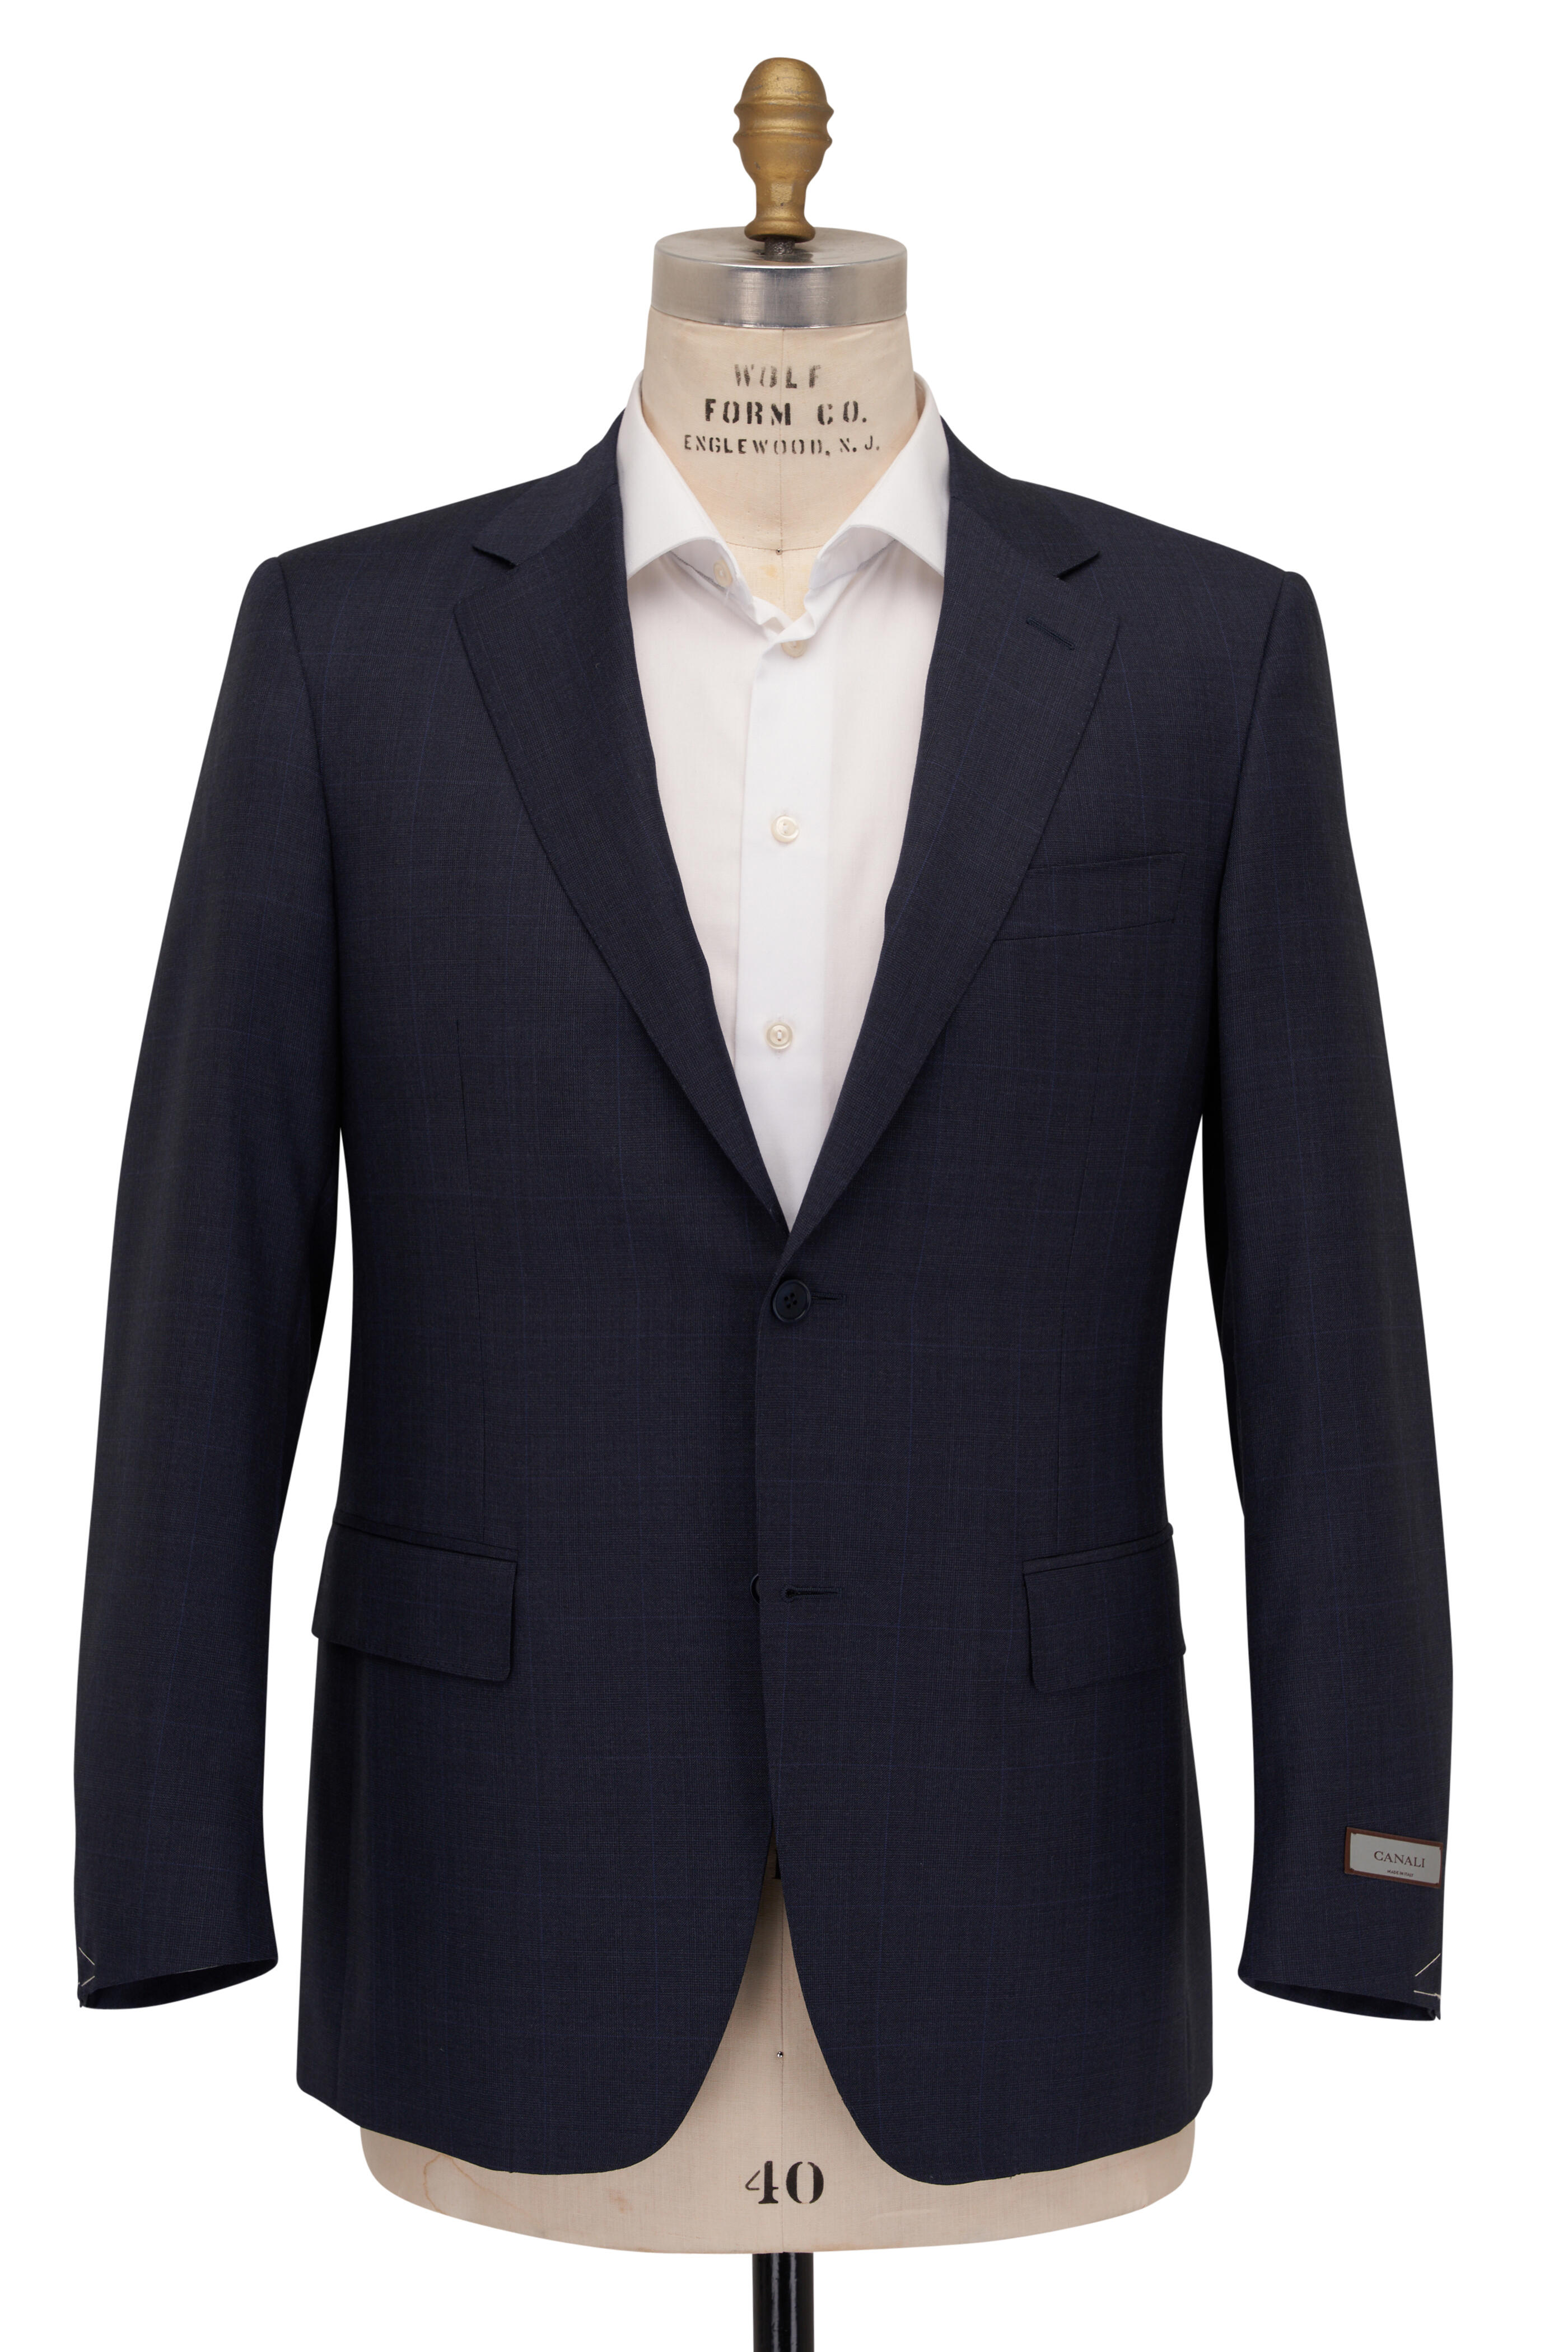 Canali - Siena Medium Blue Tonal Plaid Wool Suit